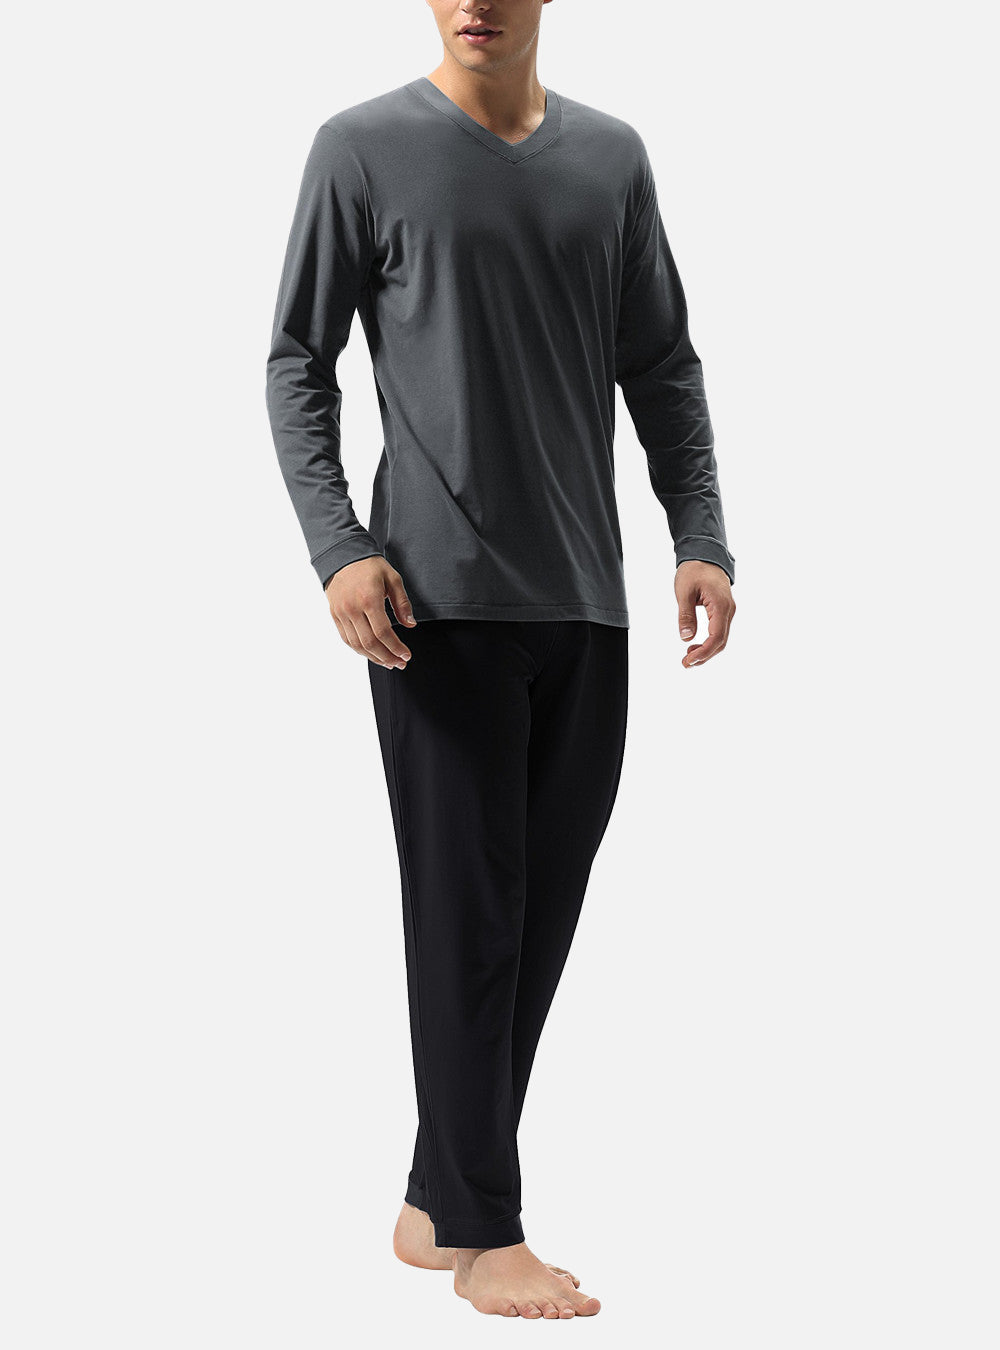 David Archy® Men's Pajamas Set V-Neck Lounge Wear No Fly Cotton Sleepwear  Durable Stretchy PJs Top and Bottom